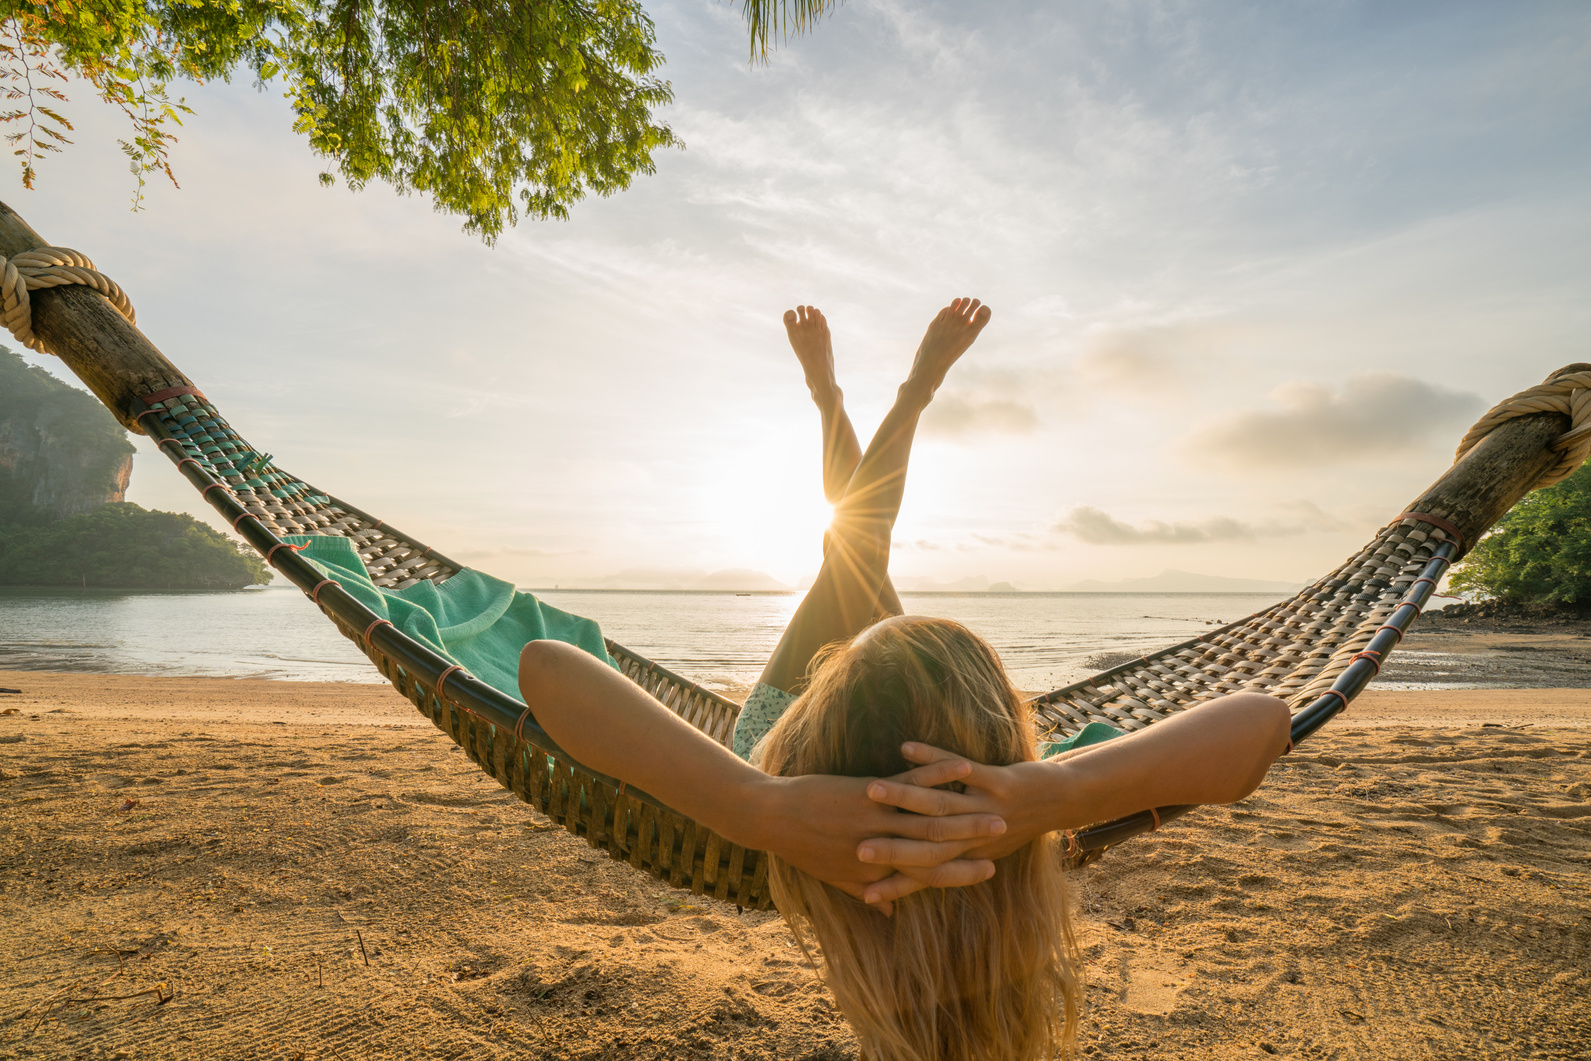 Dream life, female relaxing in hammock on tropical beach